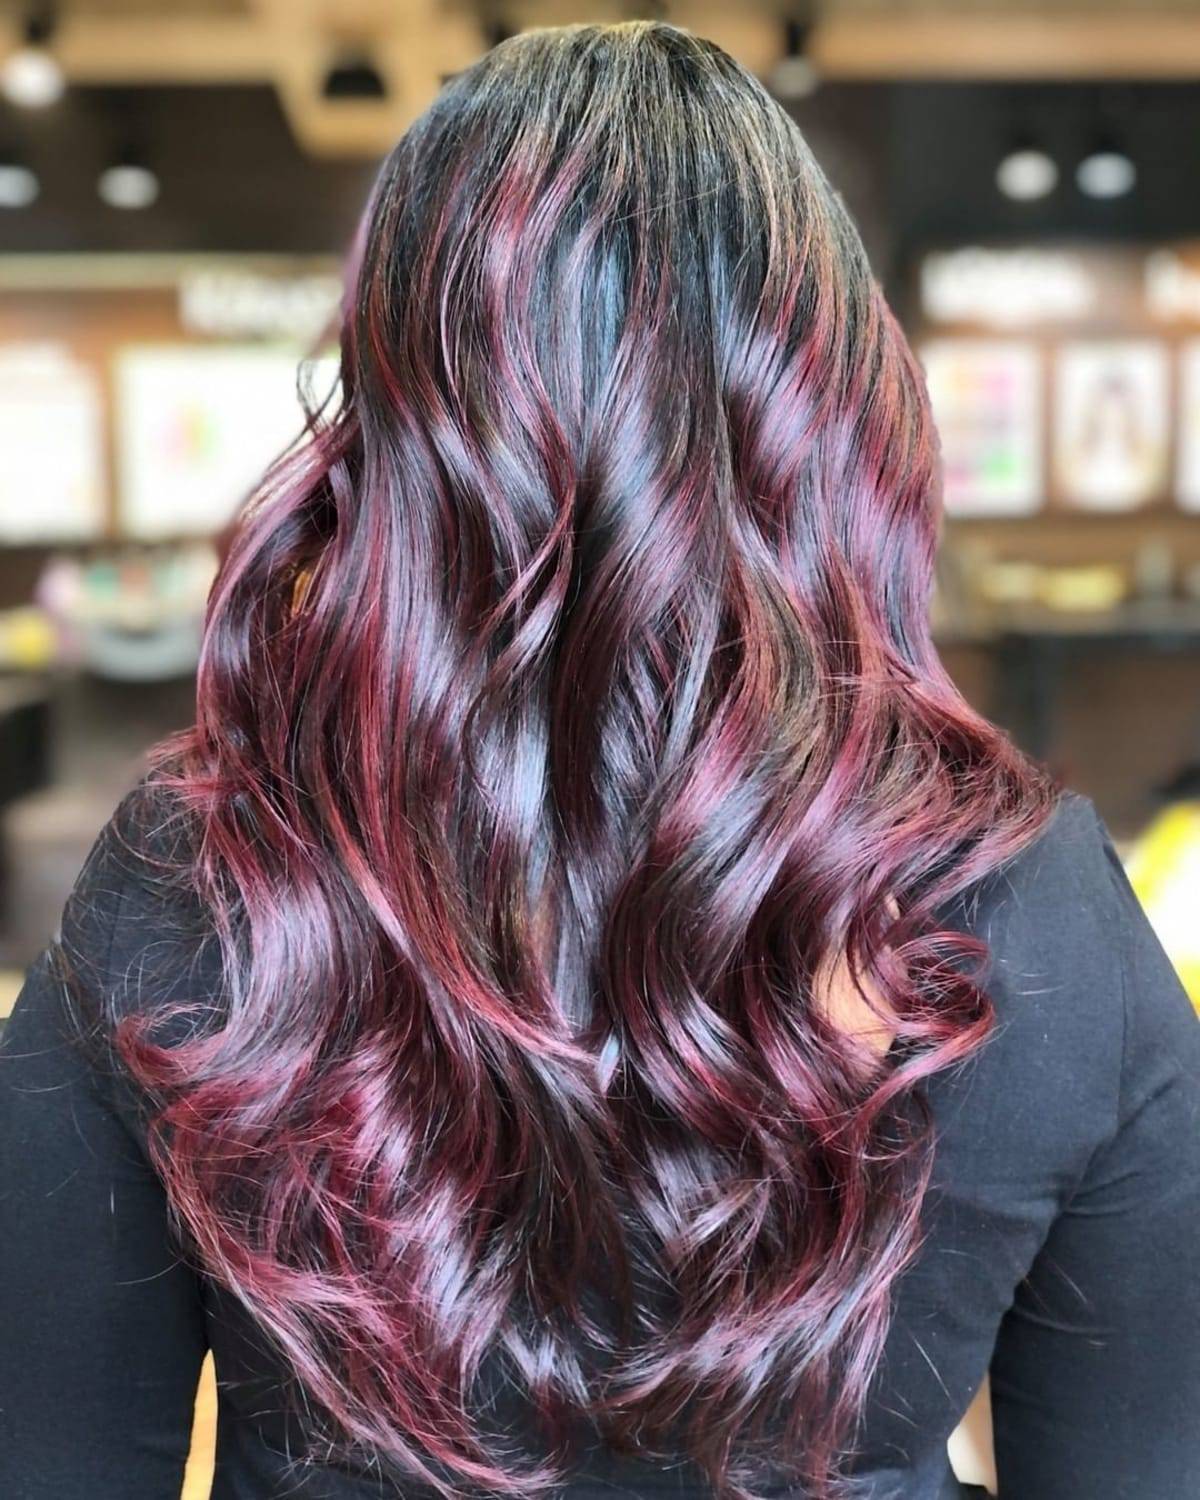 21 Black Cherry Hair Color Ideas to Inspire Your Next Salon Visit